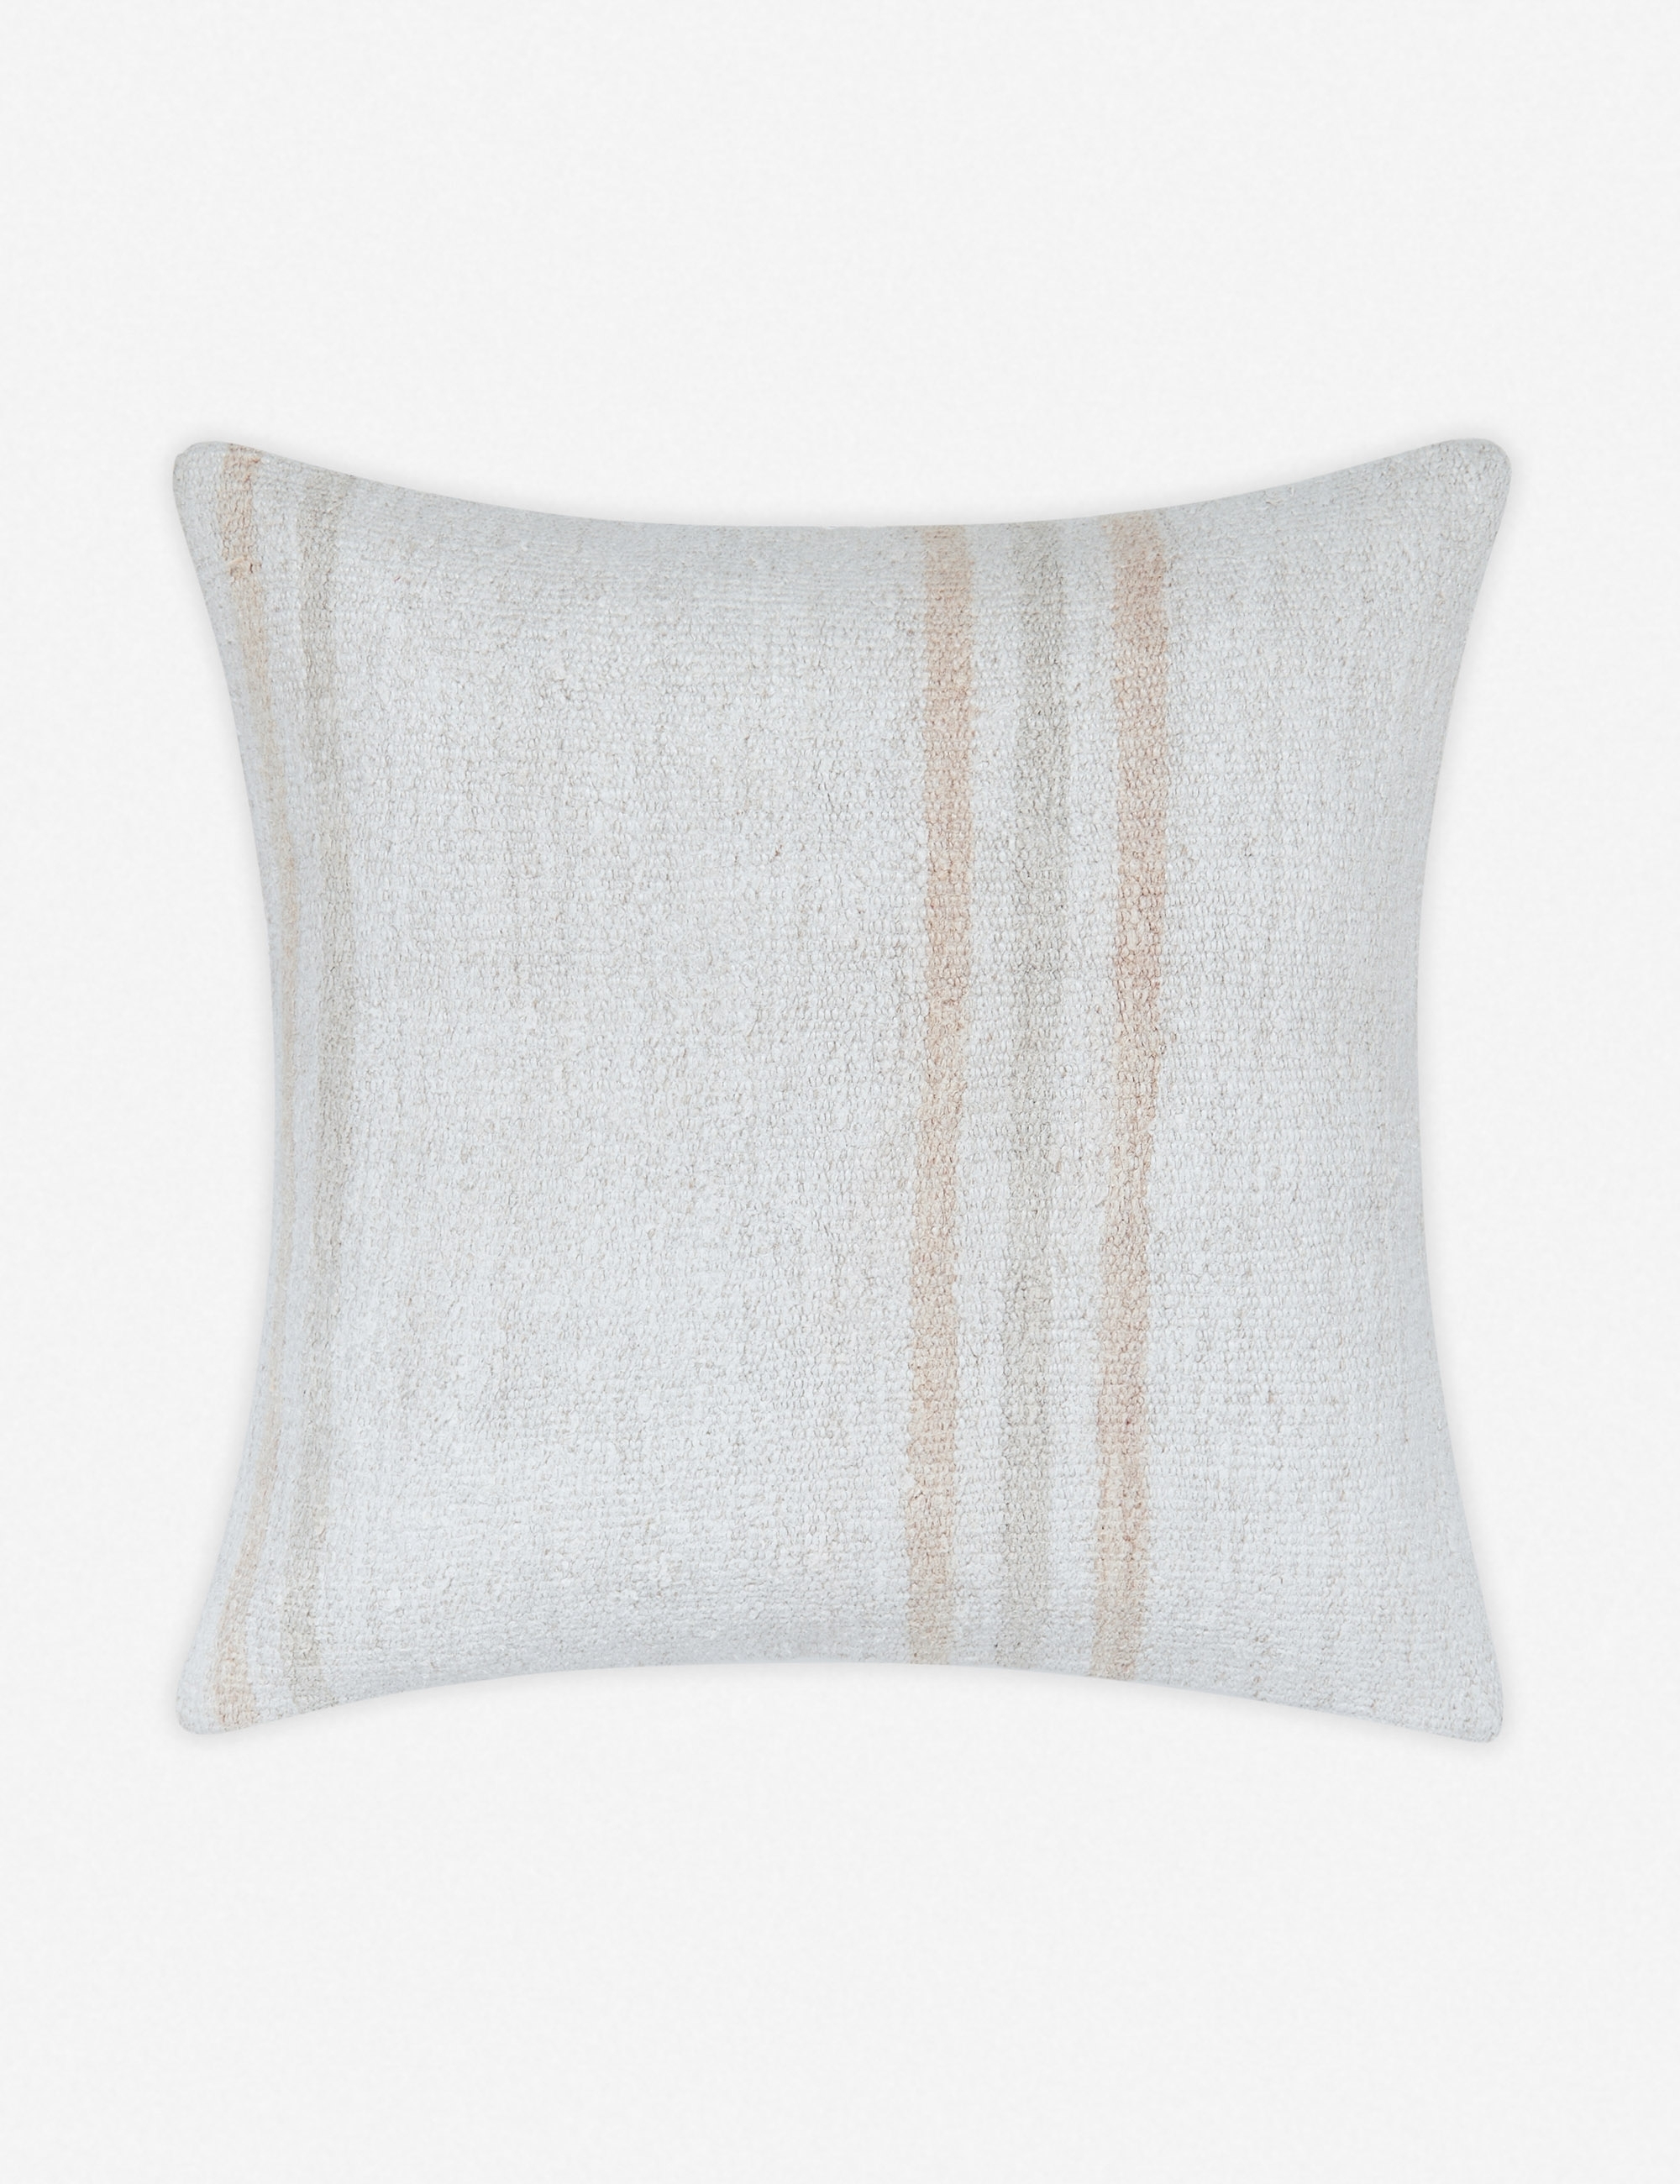 Sedona Vintage Hemp Pillow - Image 0